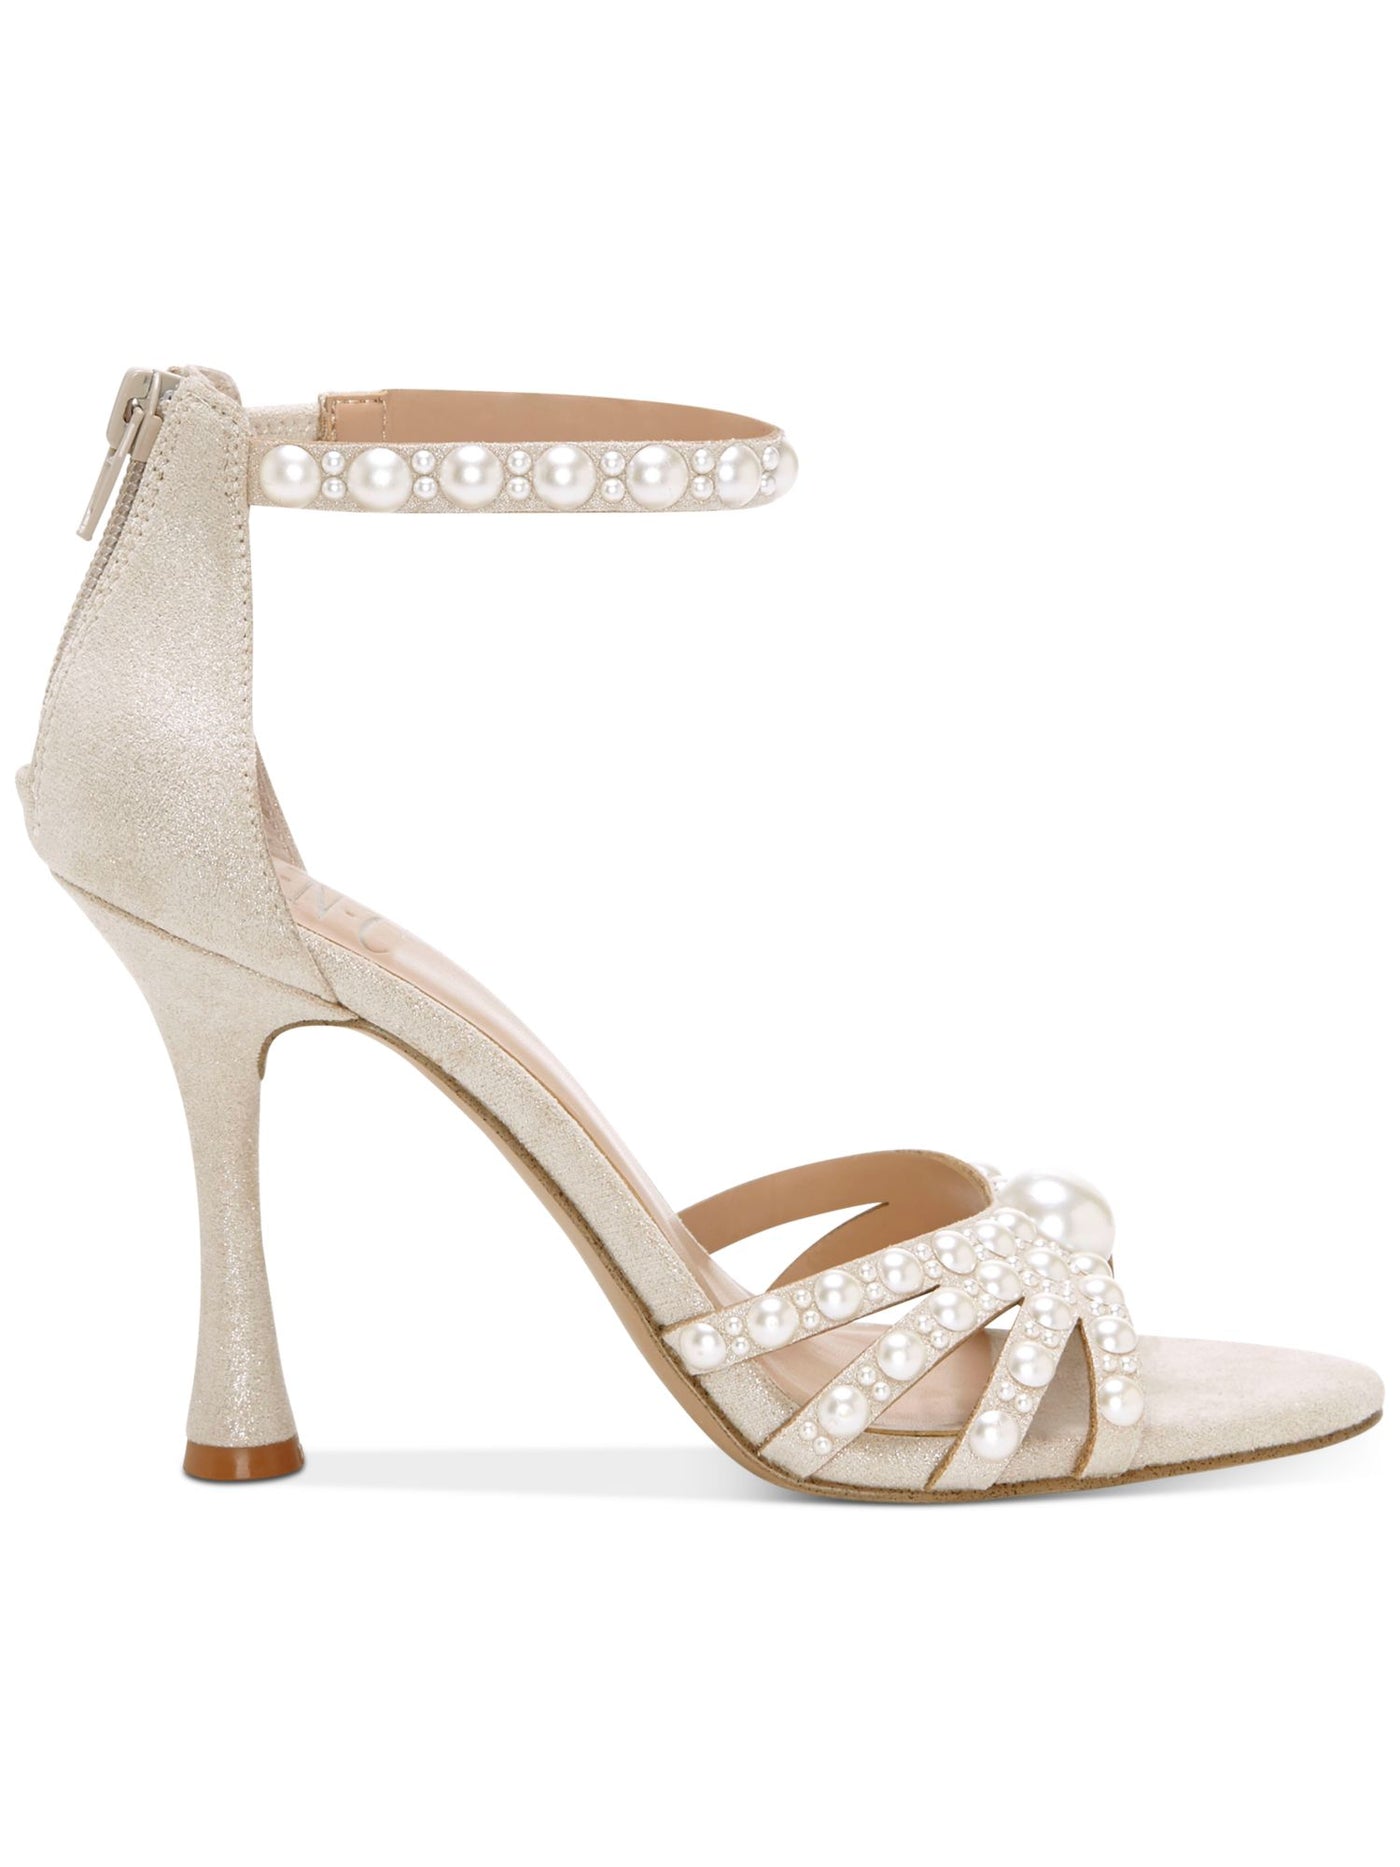 INC Womens Beige Faux Pearl Accent Rhinestone Glitter Riolana Round Toe Flare Zip-Up Dress Sandals Shoes 7.5 M